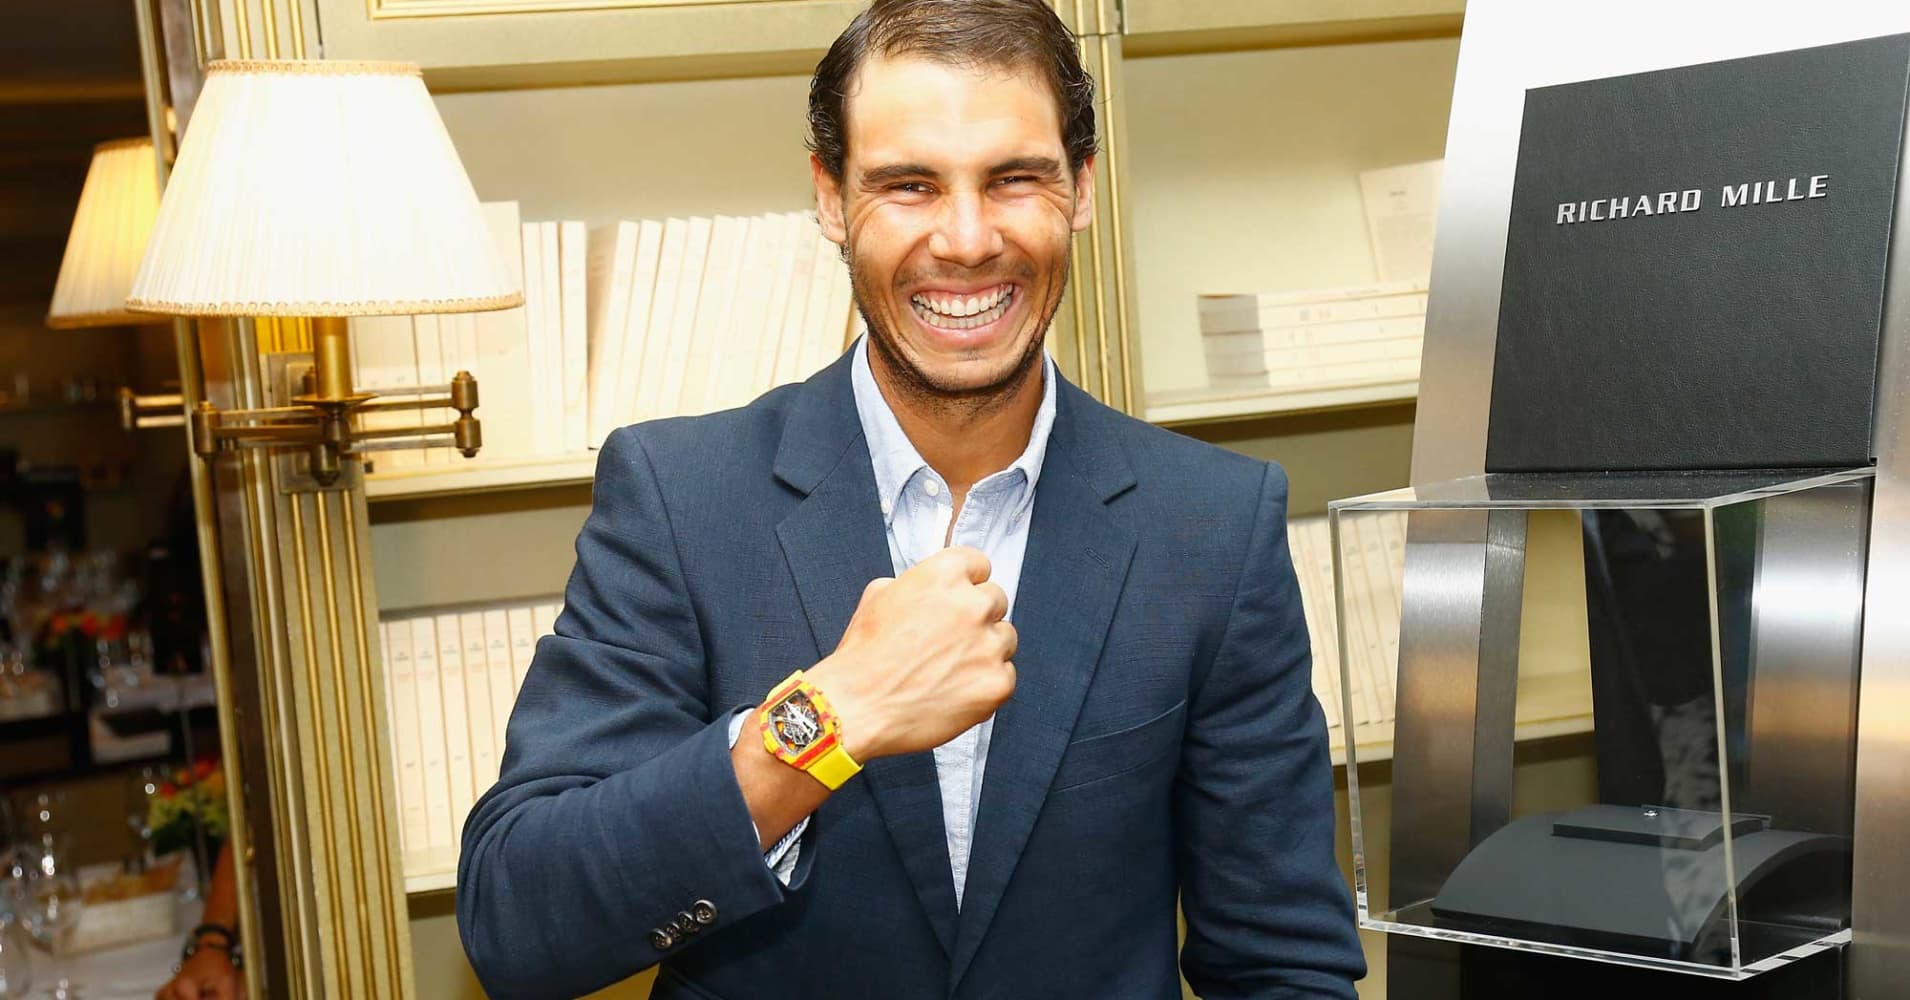 Tennis pro Rafa Nadal's new $725,000 Richard Mille watch